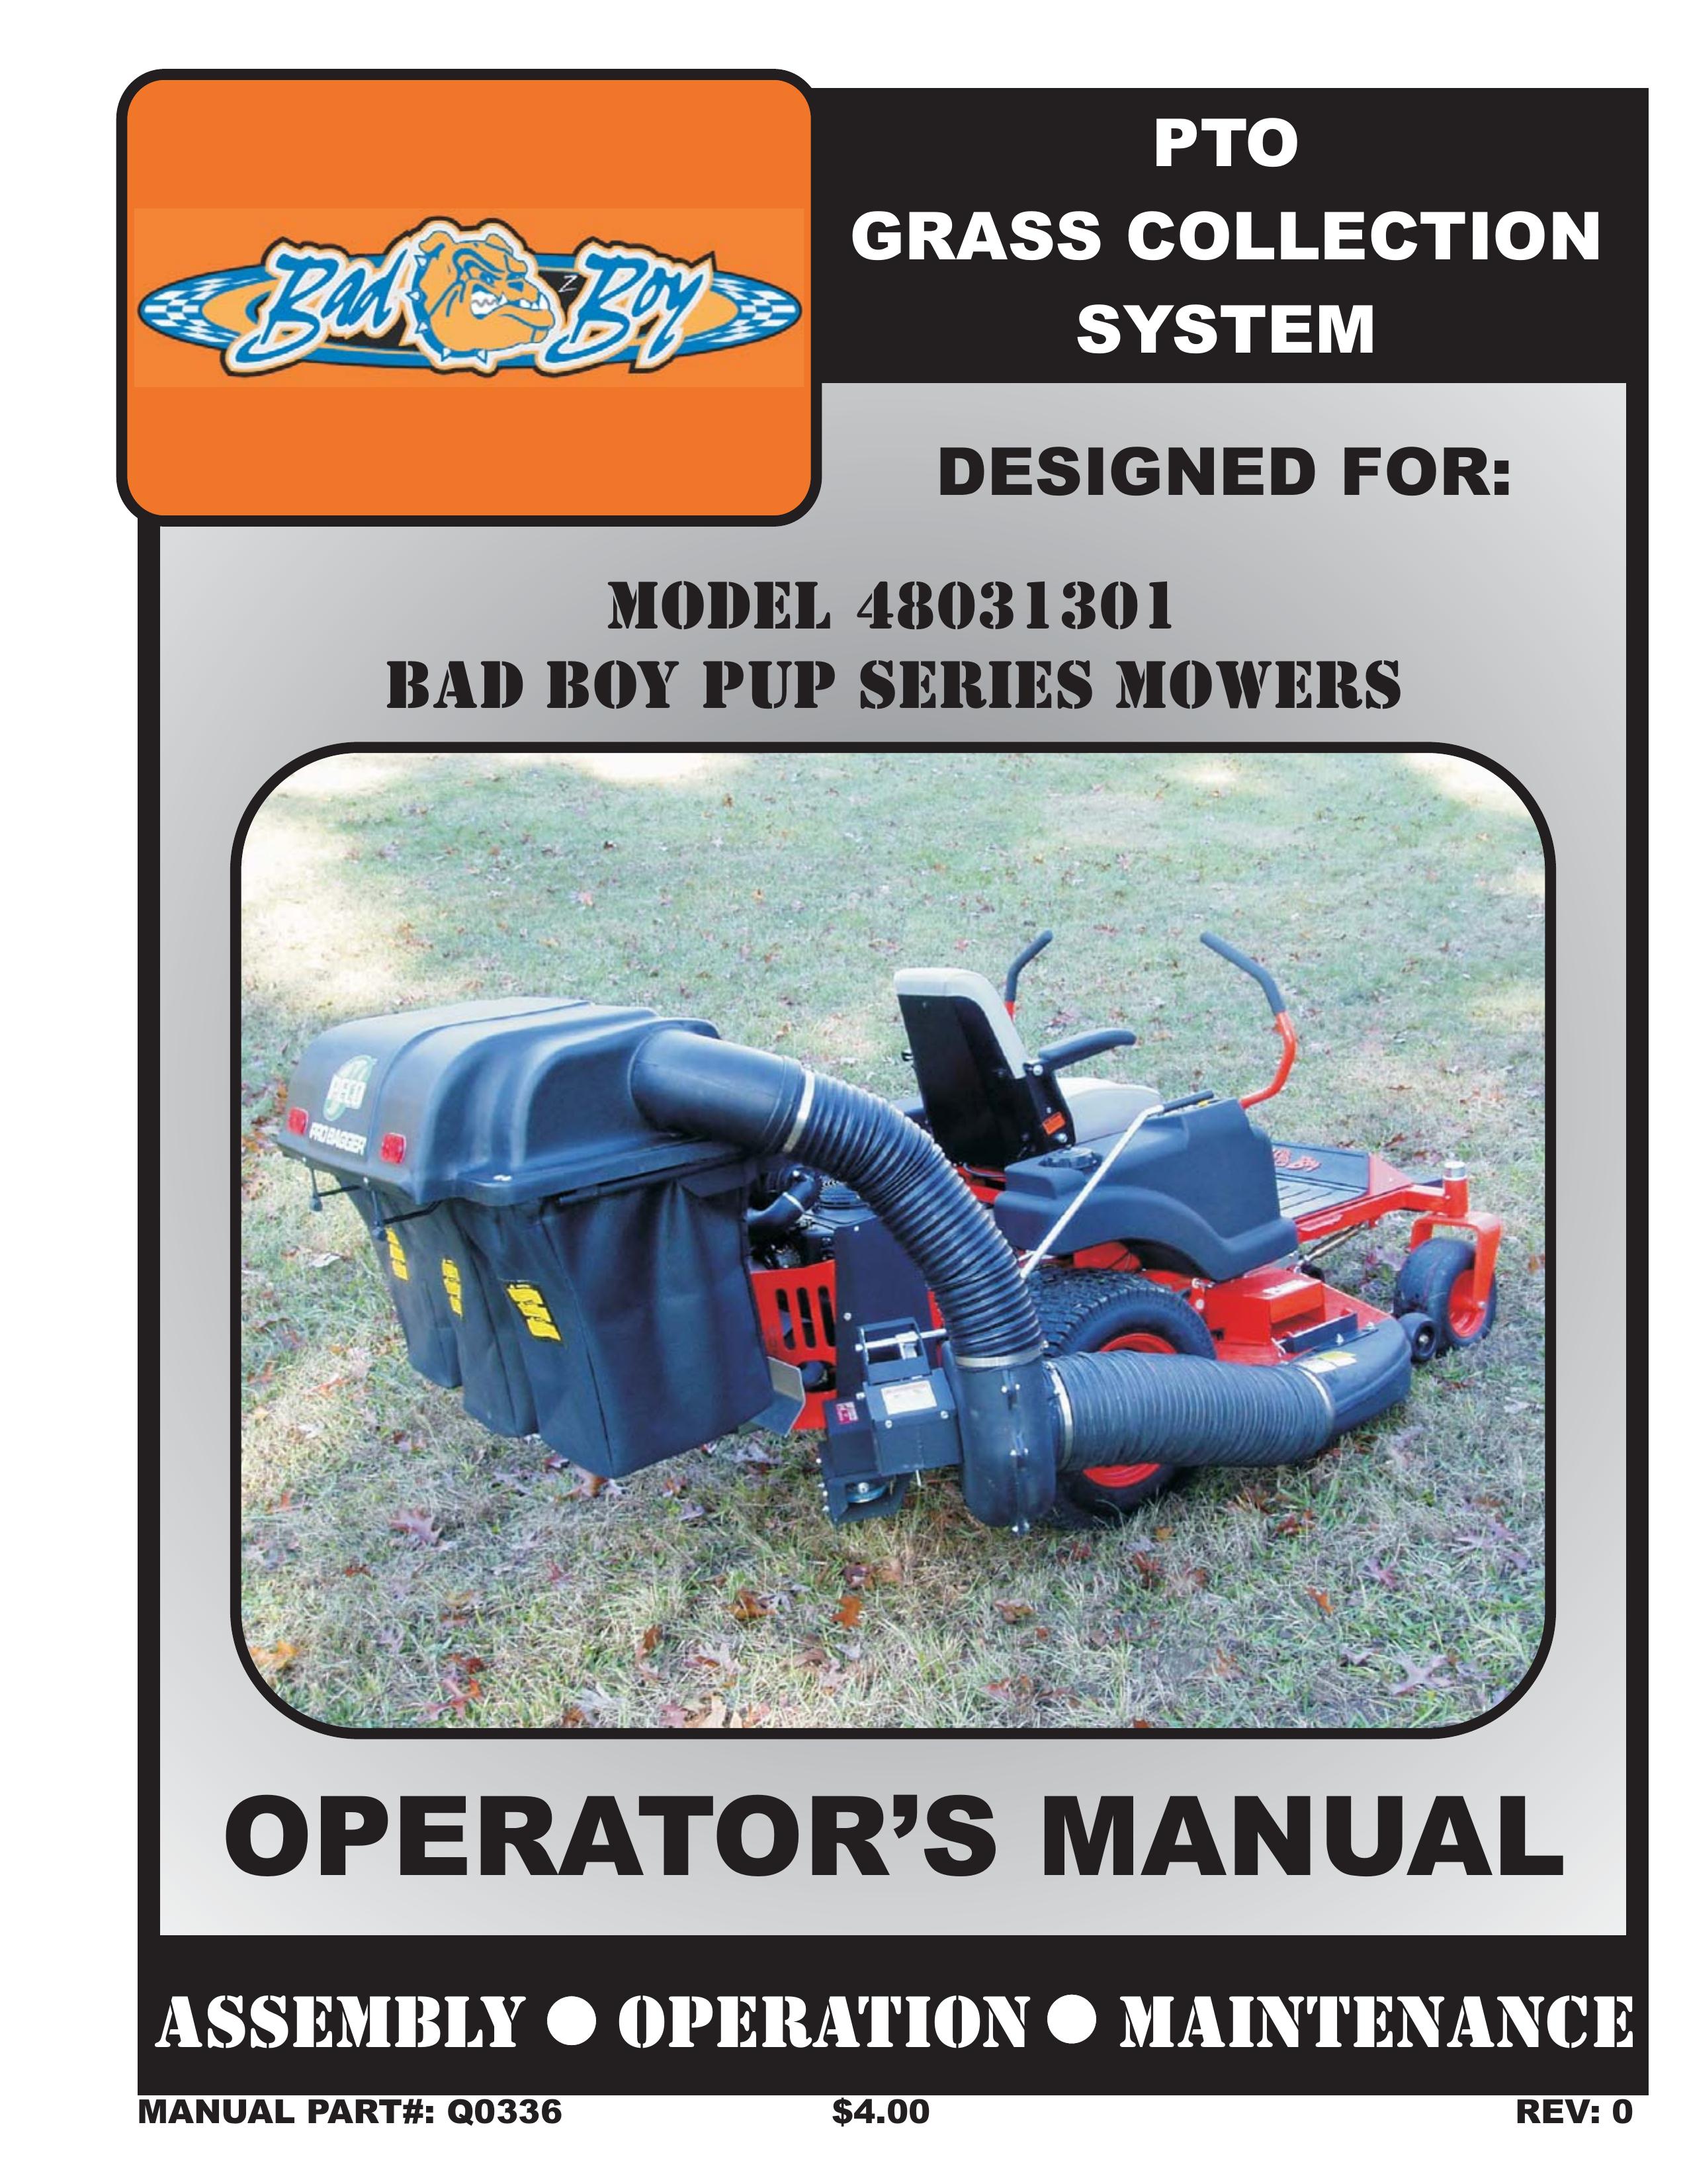 Bad Boy Mowers 48031301 Lawn Mower User Manual